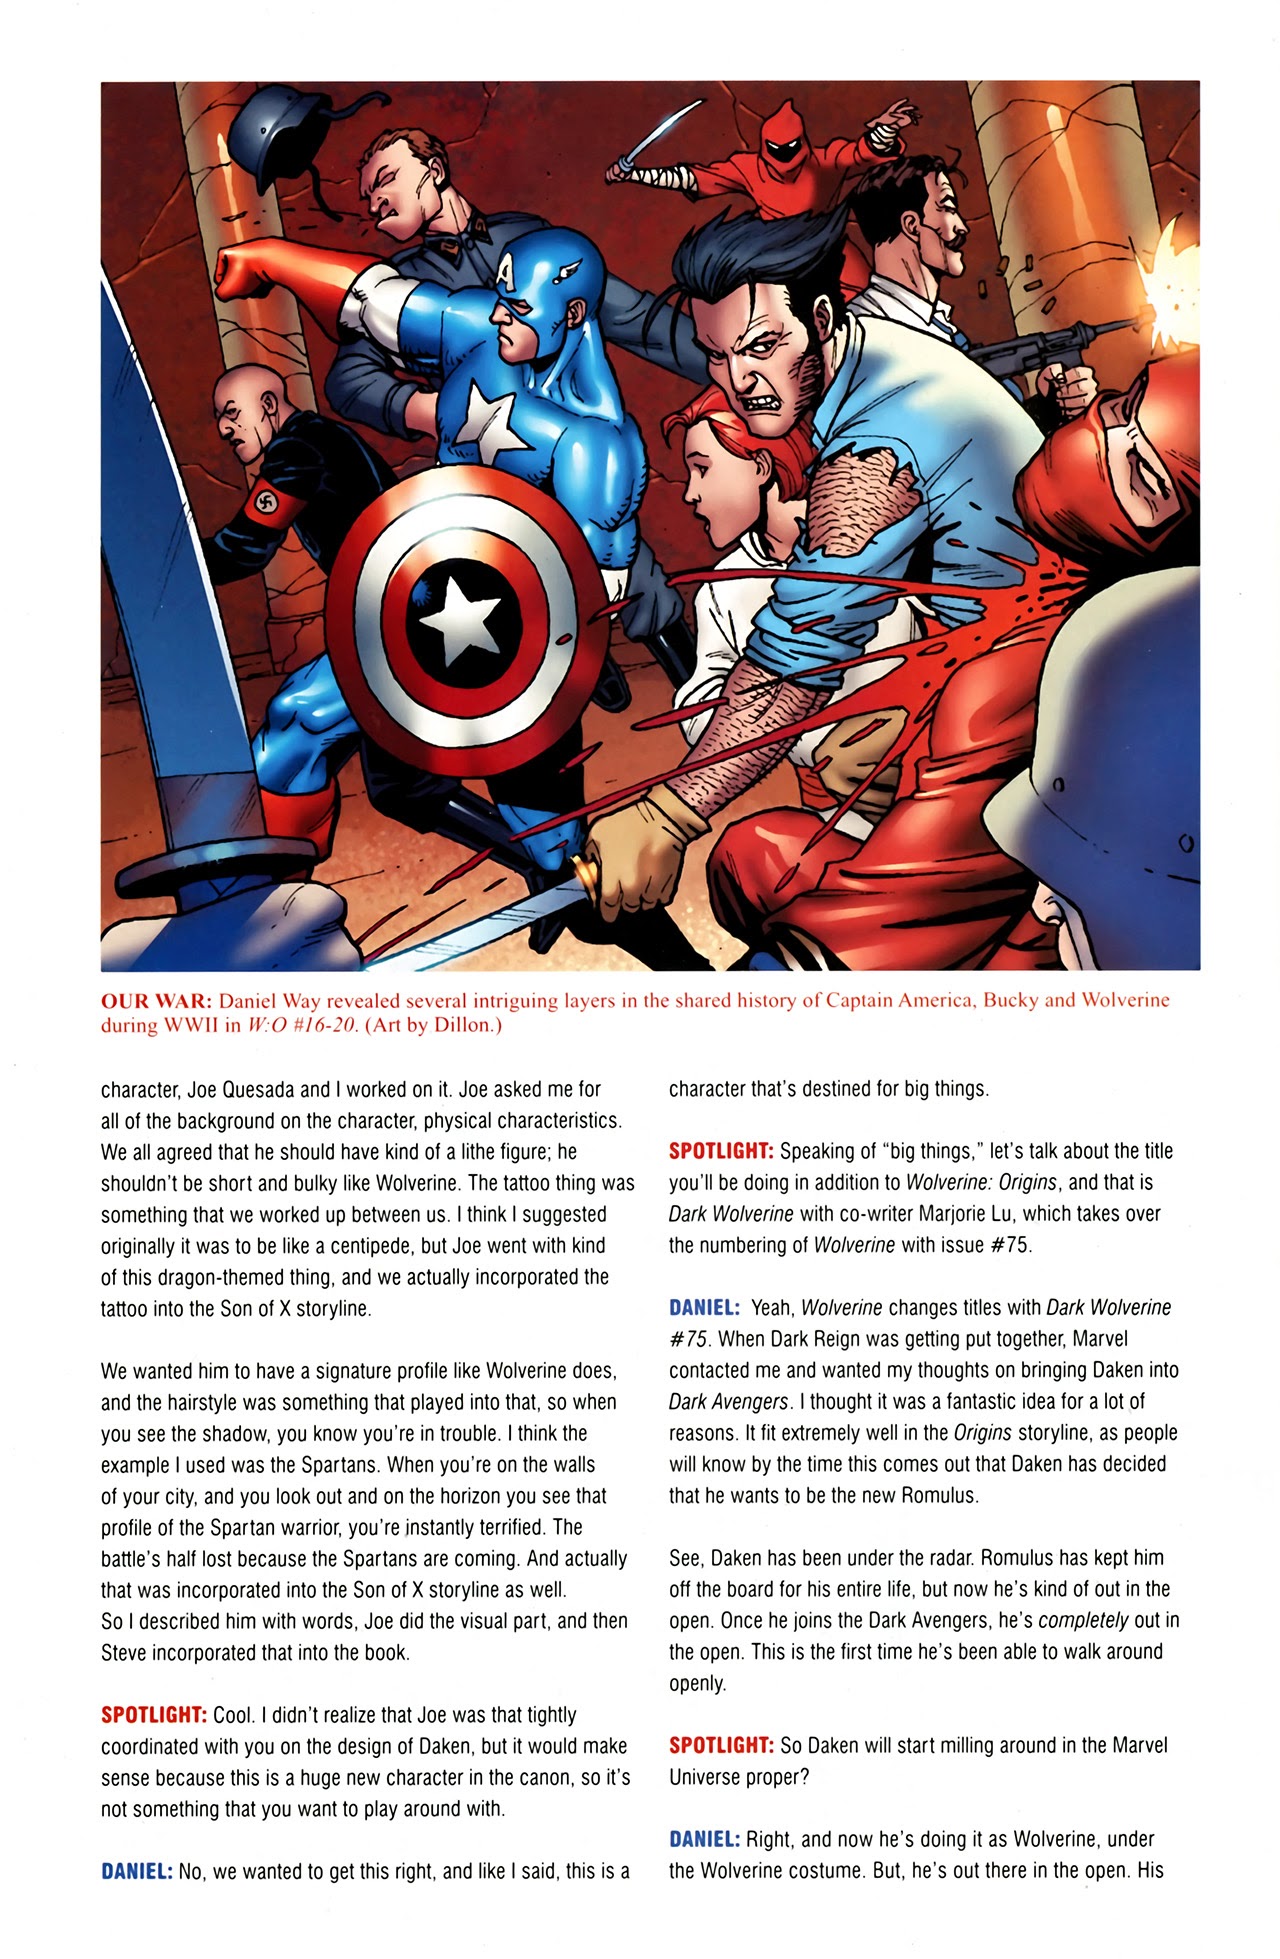 Huge Captain America Lore Change Rewrites Origin & Source of